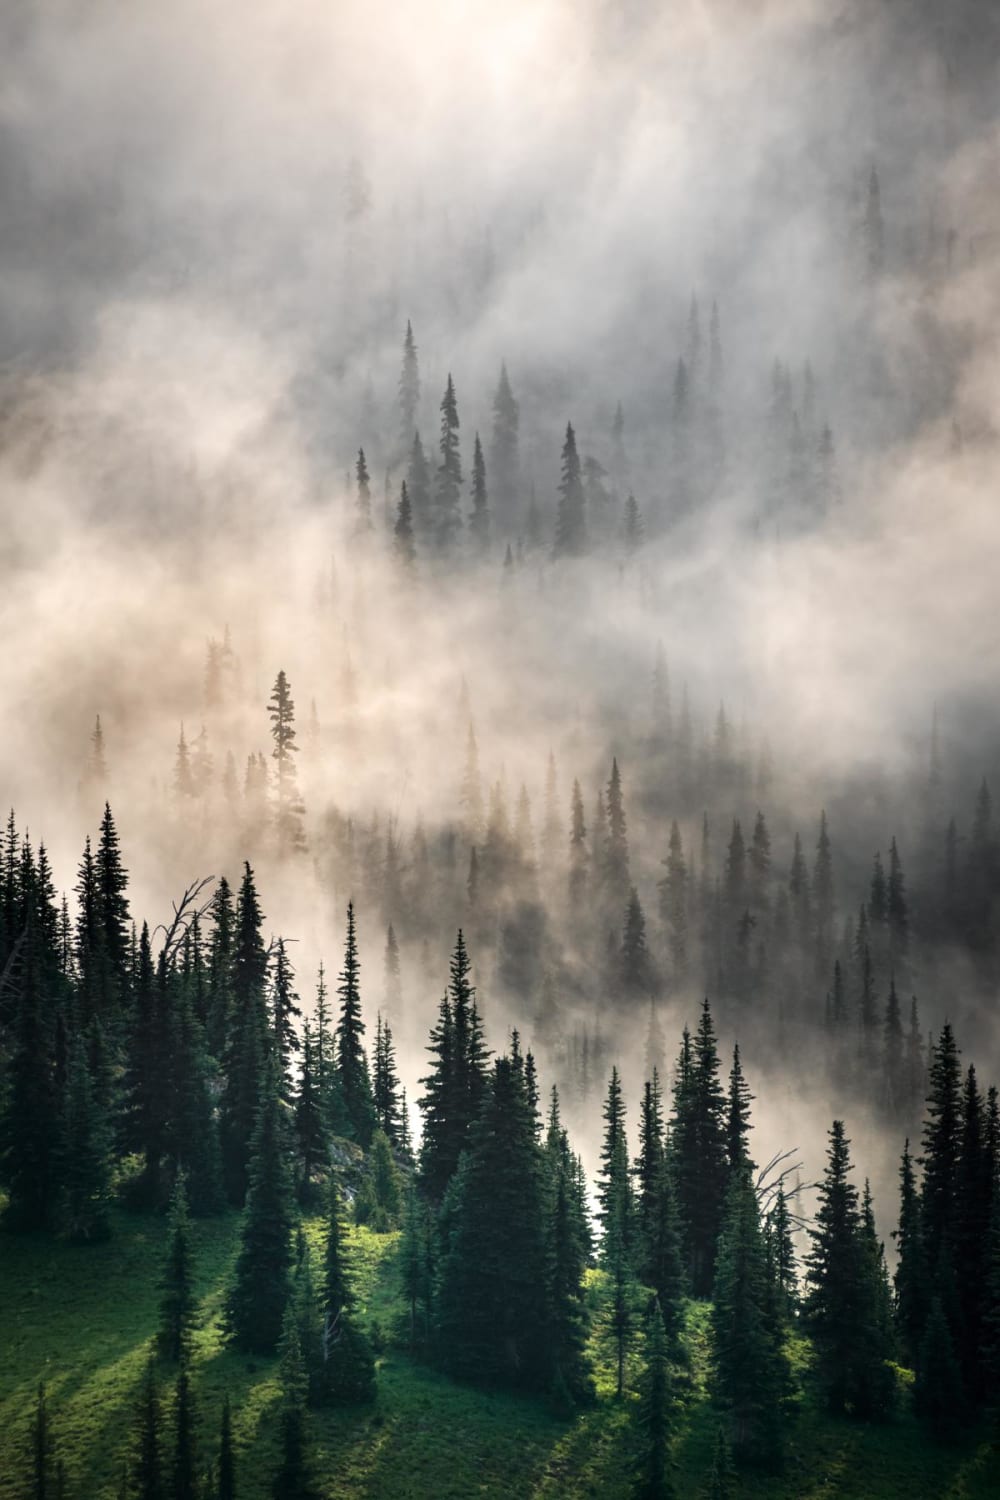 Low lying morning fog creating an eerie scene at Mt. Rainier National Park